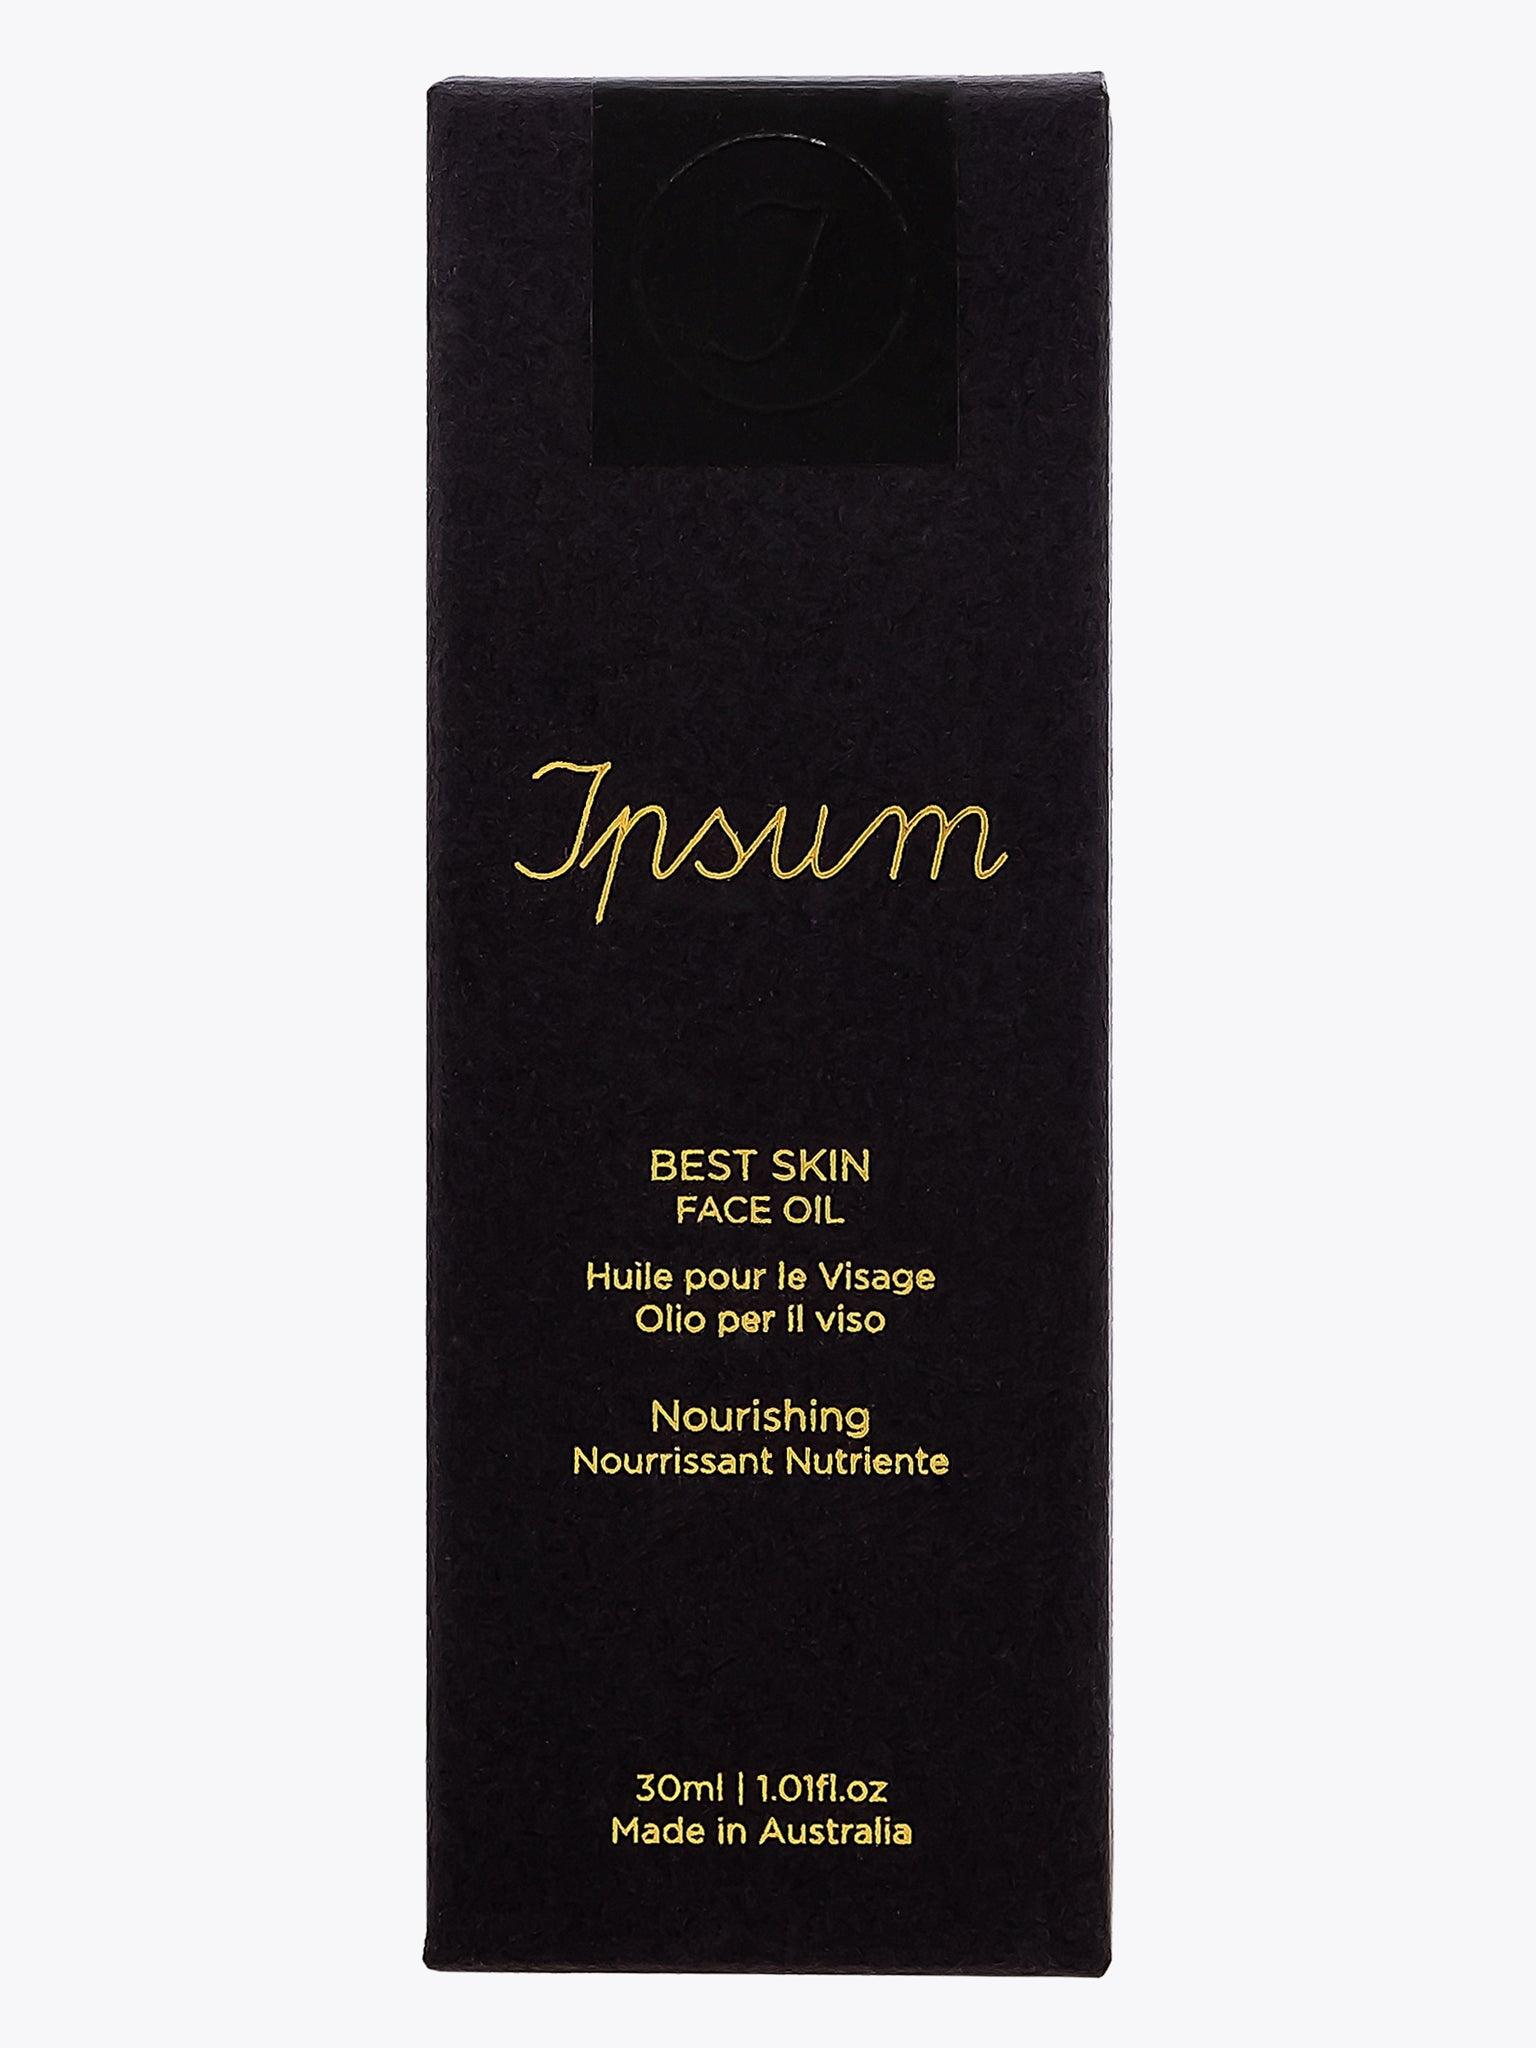 Ipsum Best Skin Face Oil Nourishing 30ml